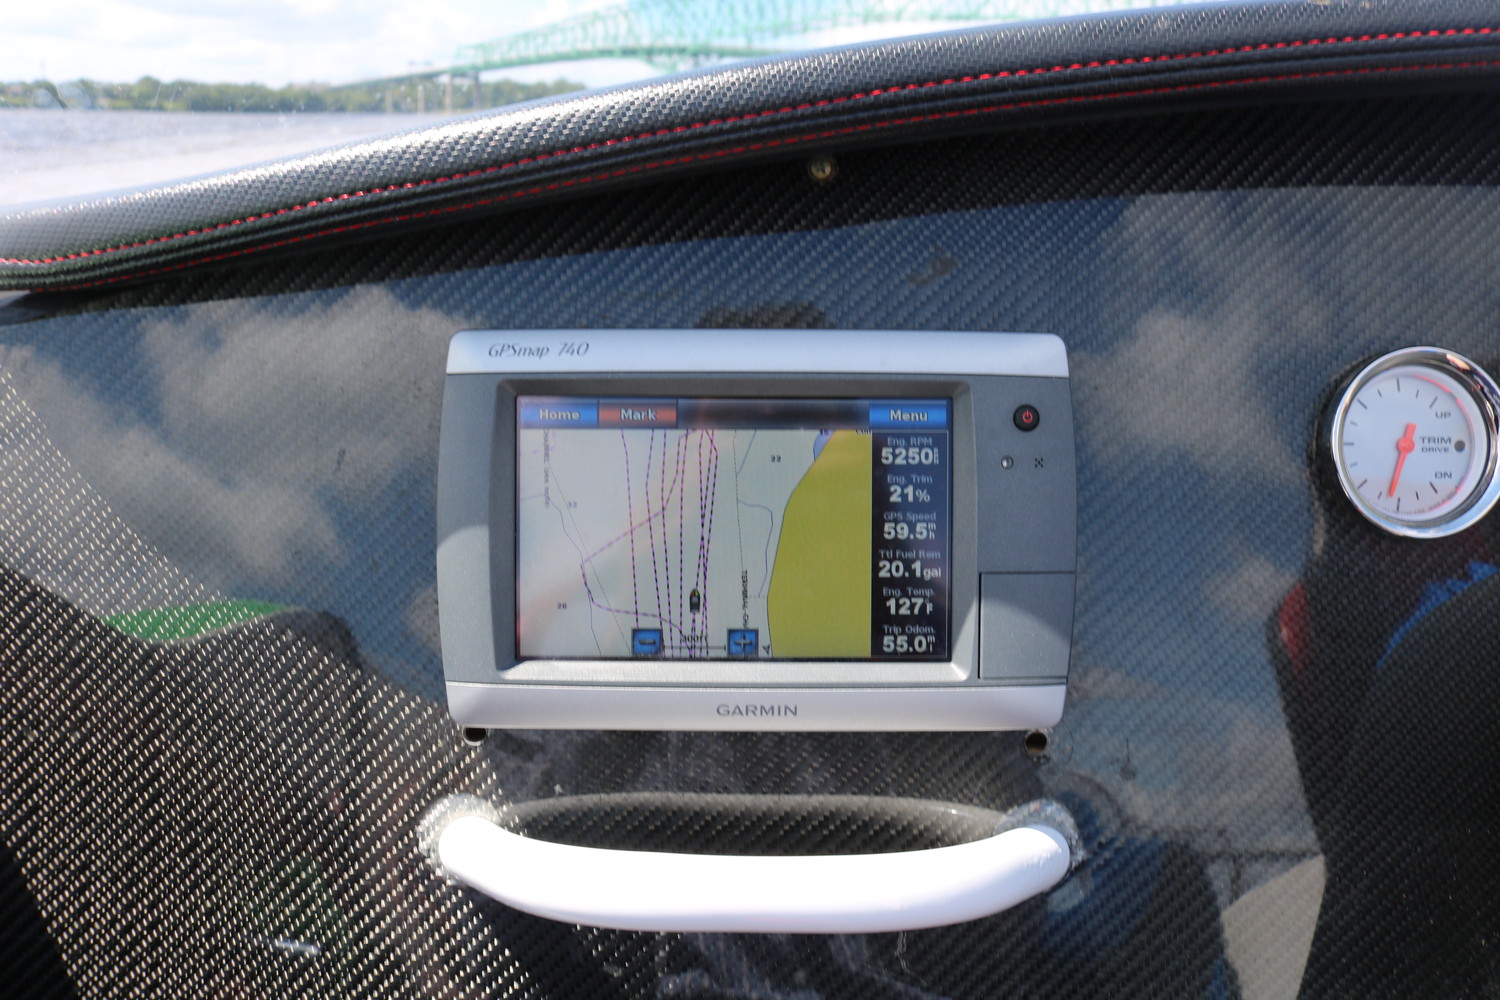 A navigator uses a Garmin GPS to help guide the driver through the course.